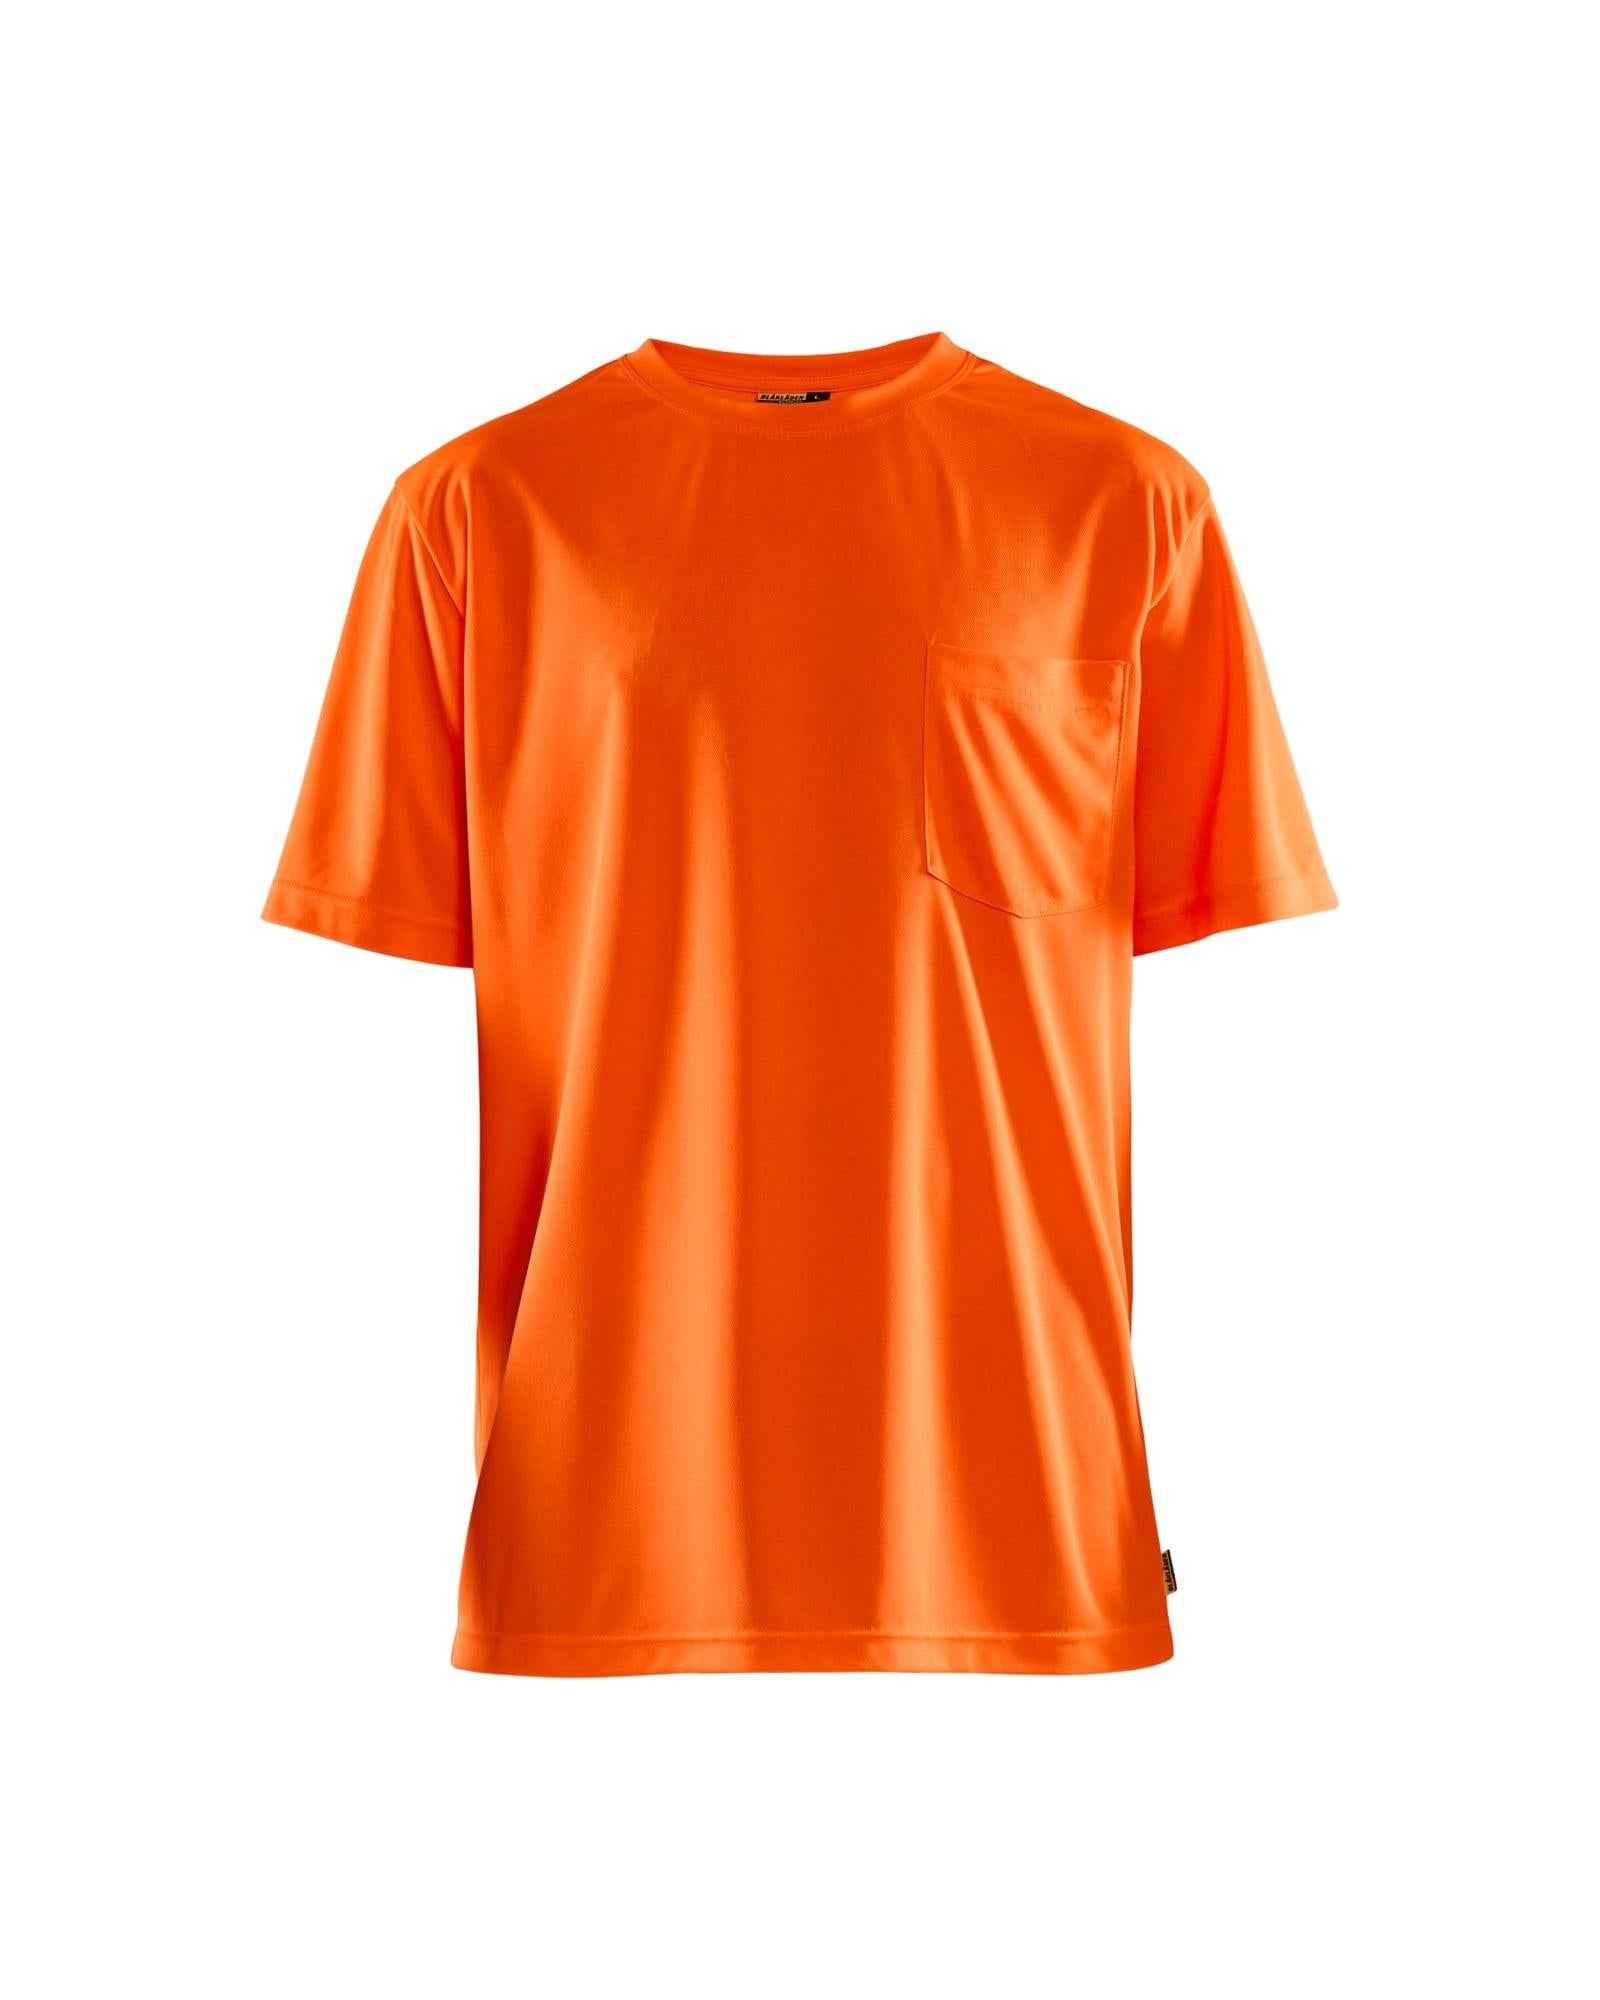 Blaklader 3487 Visibility UV Anti-Odor T-Shirt - Orange - Trusted Gear Company LLC